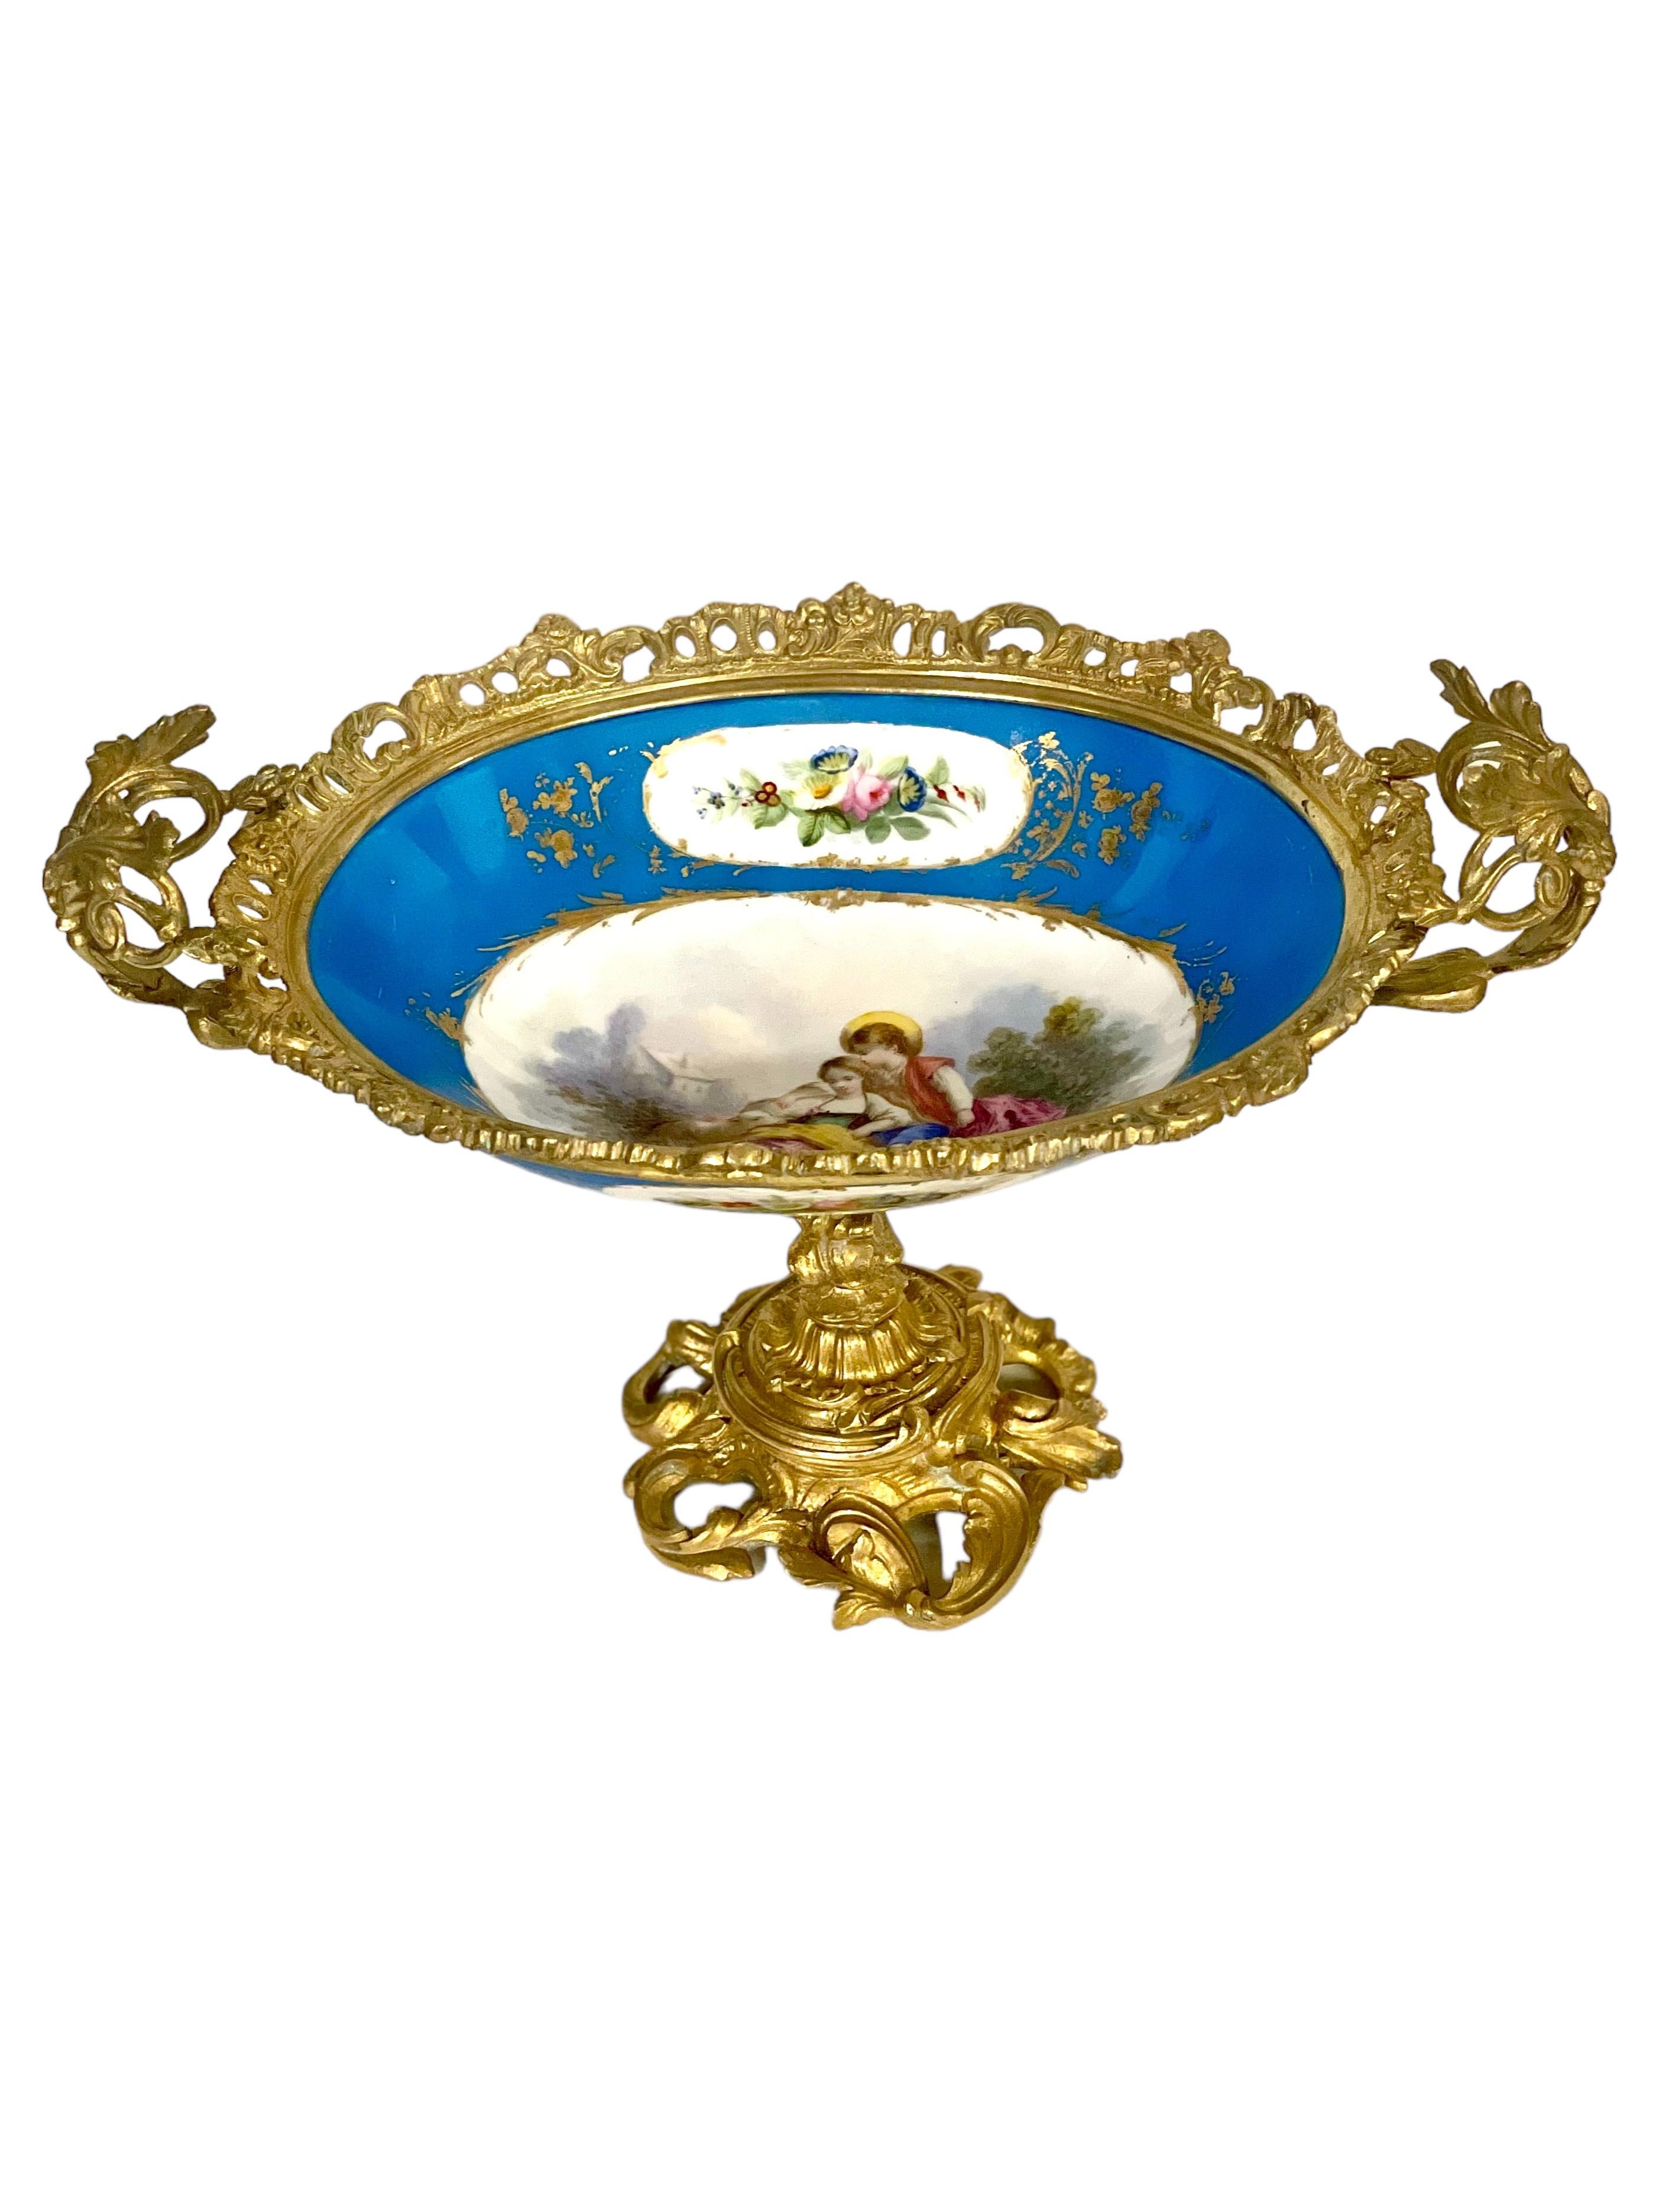 19th Century Napoleon III Sèvres Porcelain and Bronze Centerpiece For Sale 5